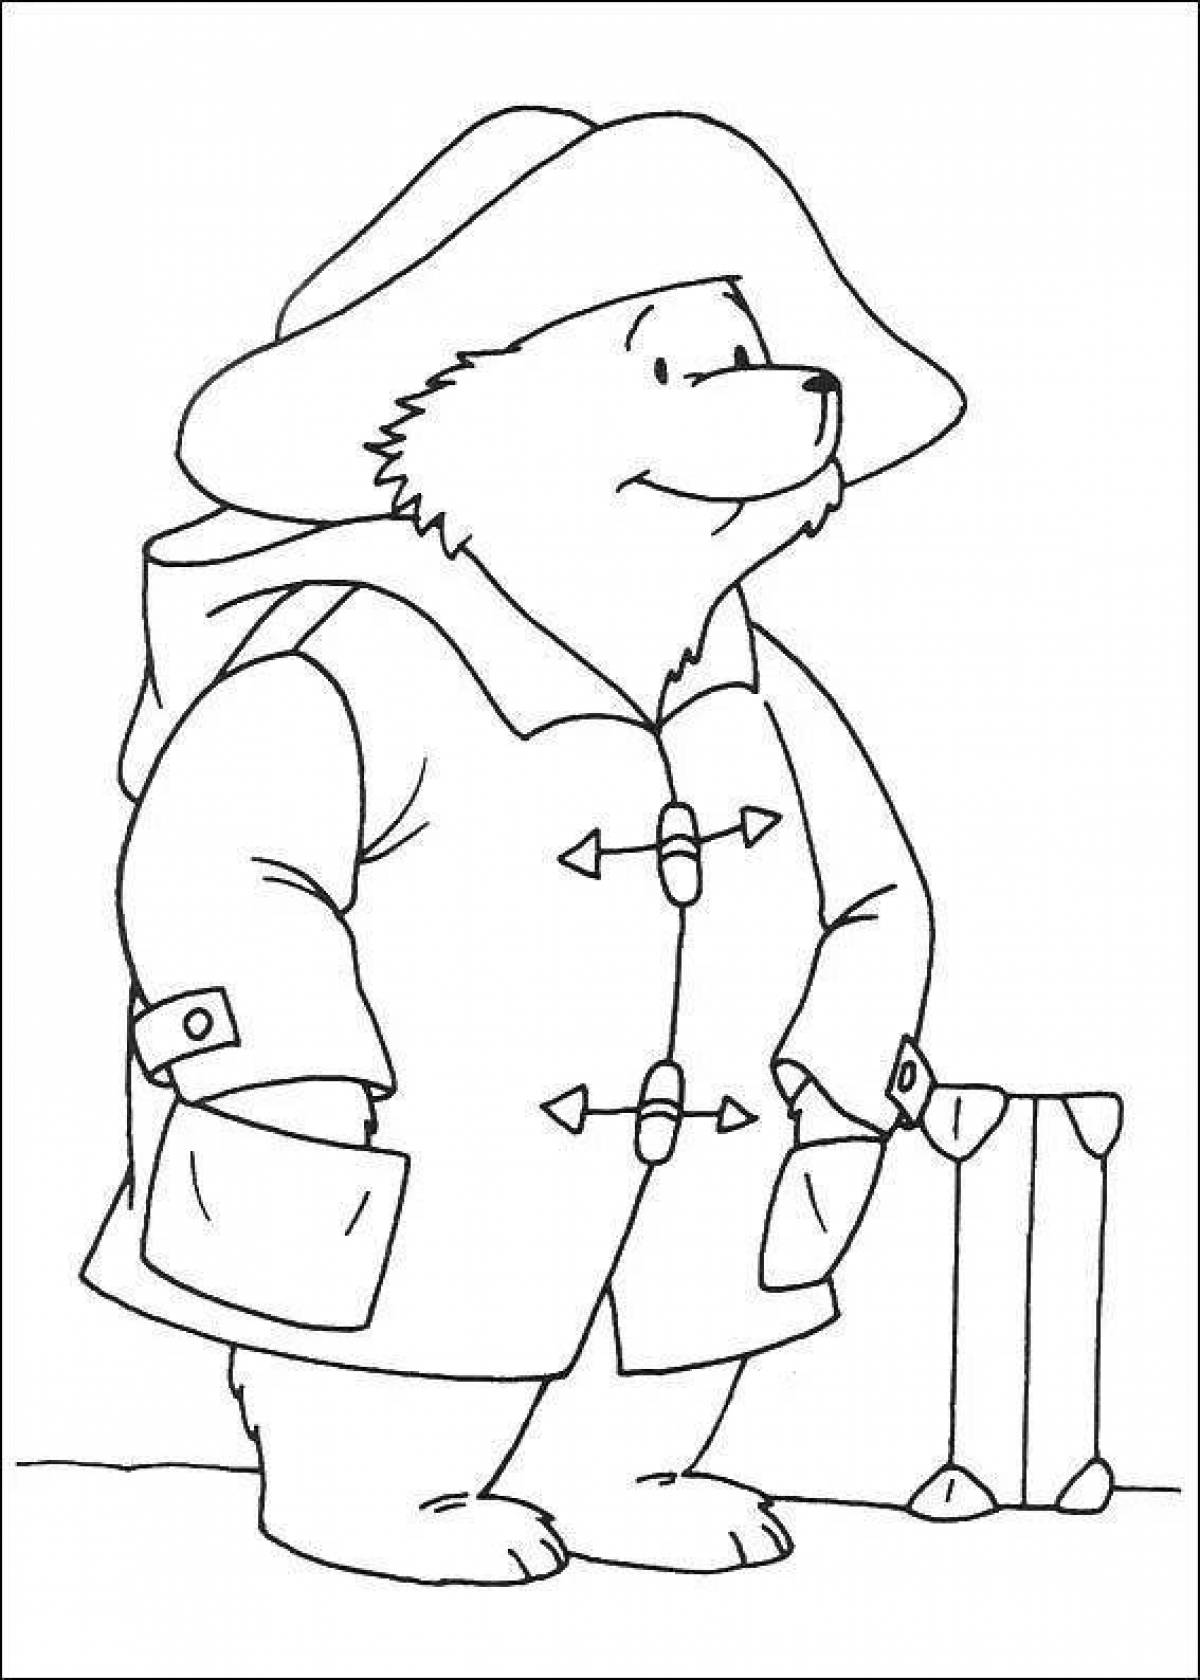 Friendly paddington bear coloring book